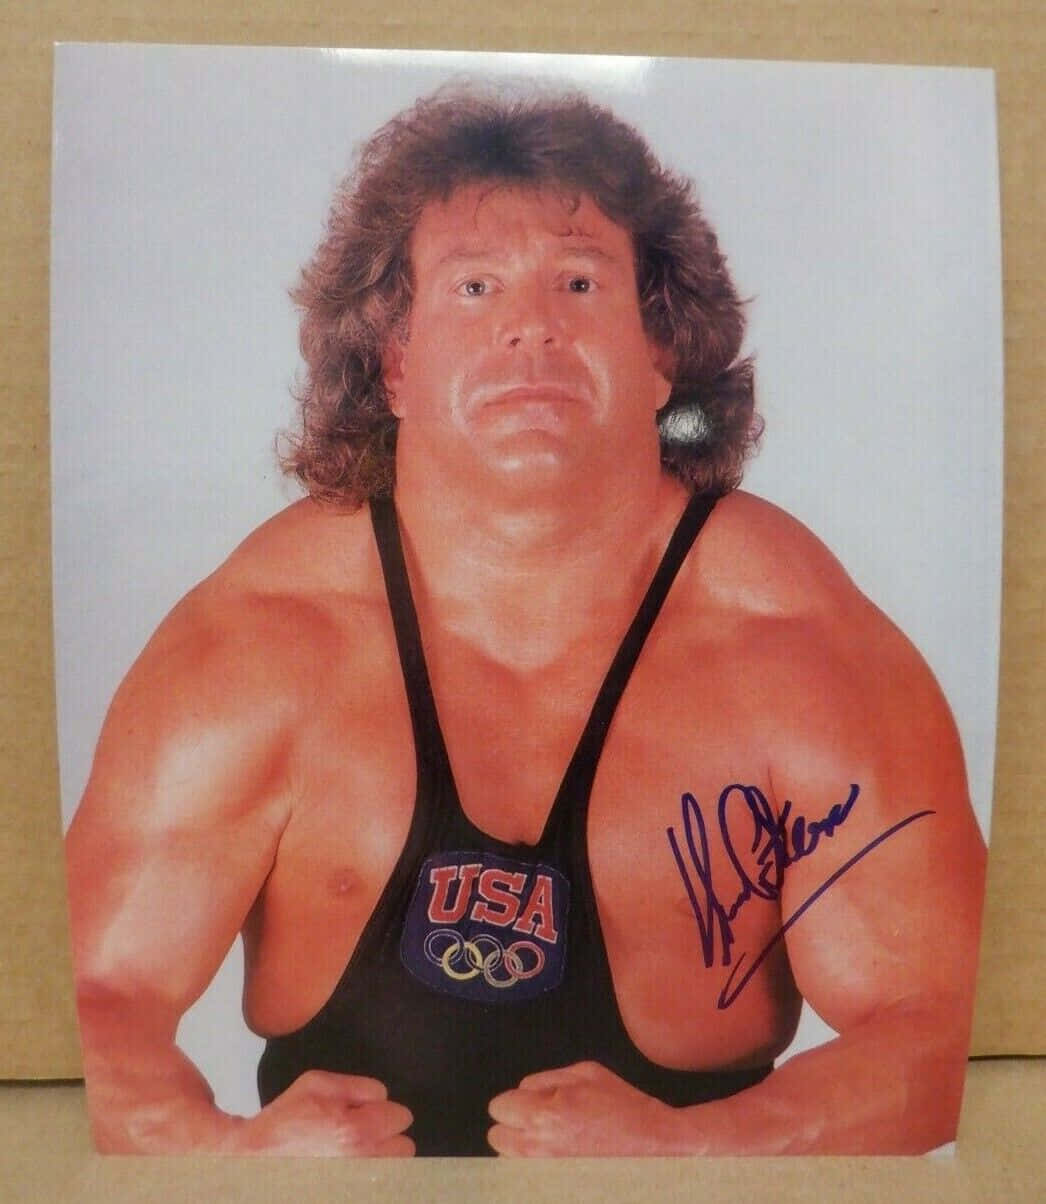 Ken Patera "The Strong Man" Wrestler Wallpaper